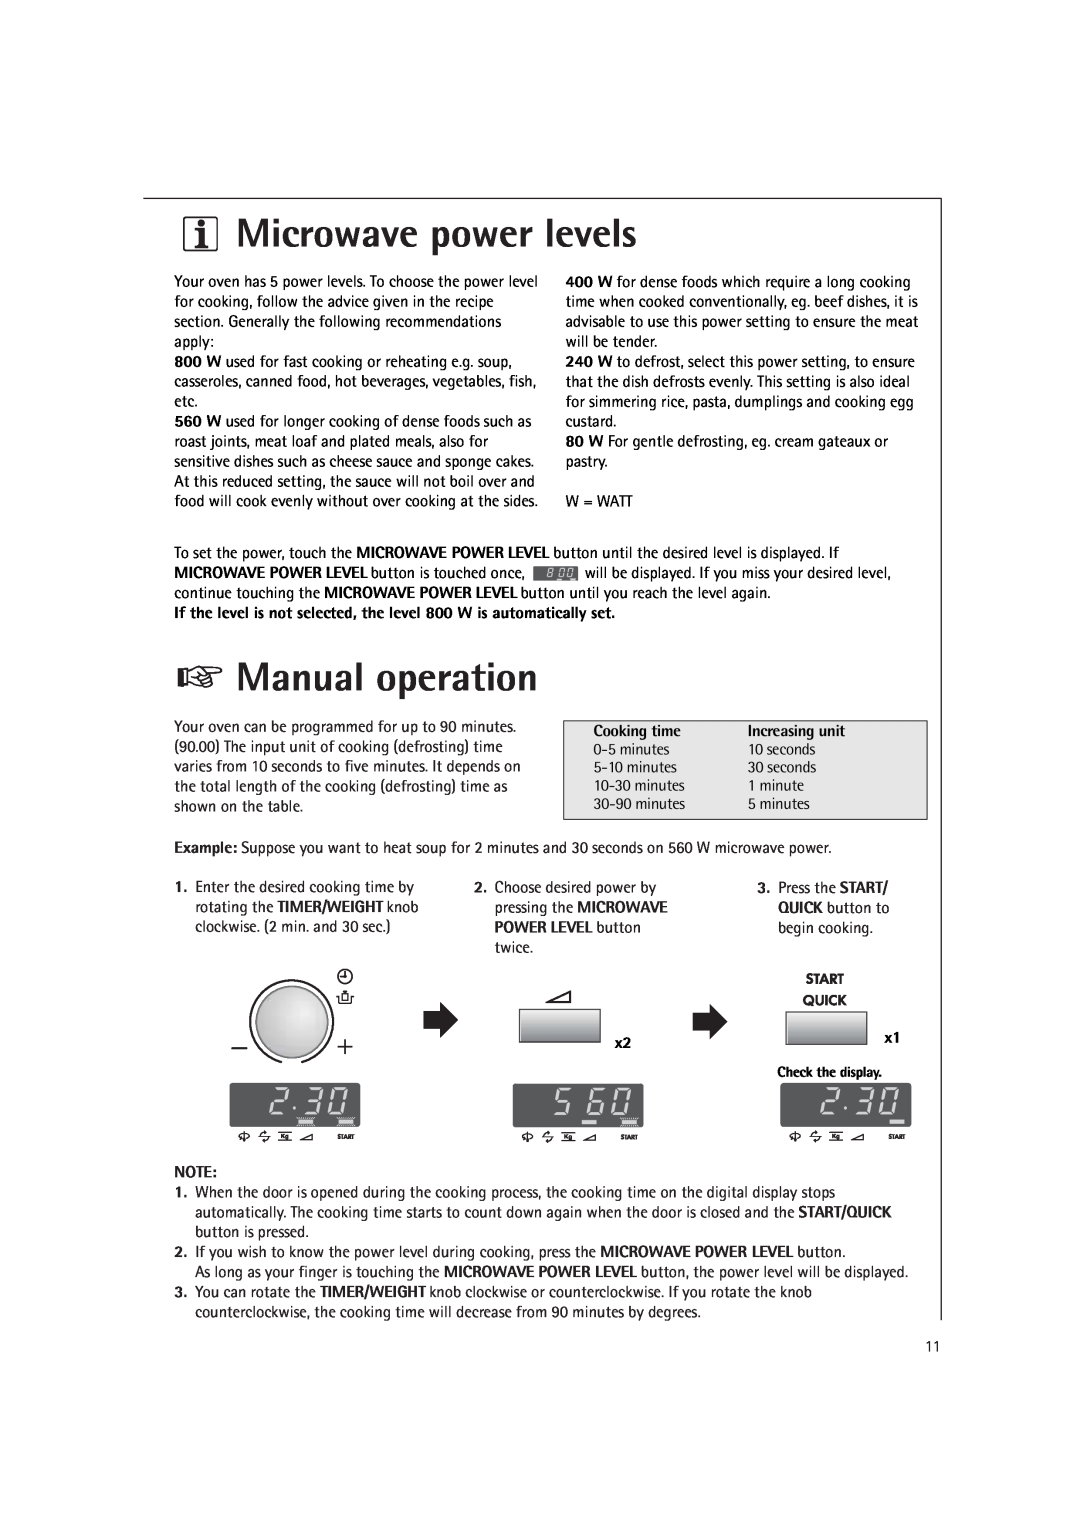 AEG MC1751E, MC1761E operating instructions Microwave power levels, Manual operation, Cooking time, Increasing unit 